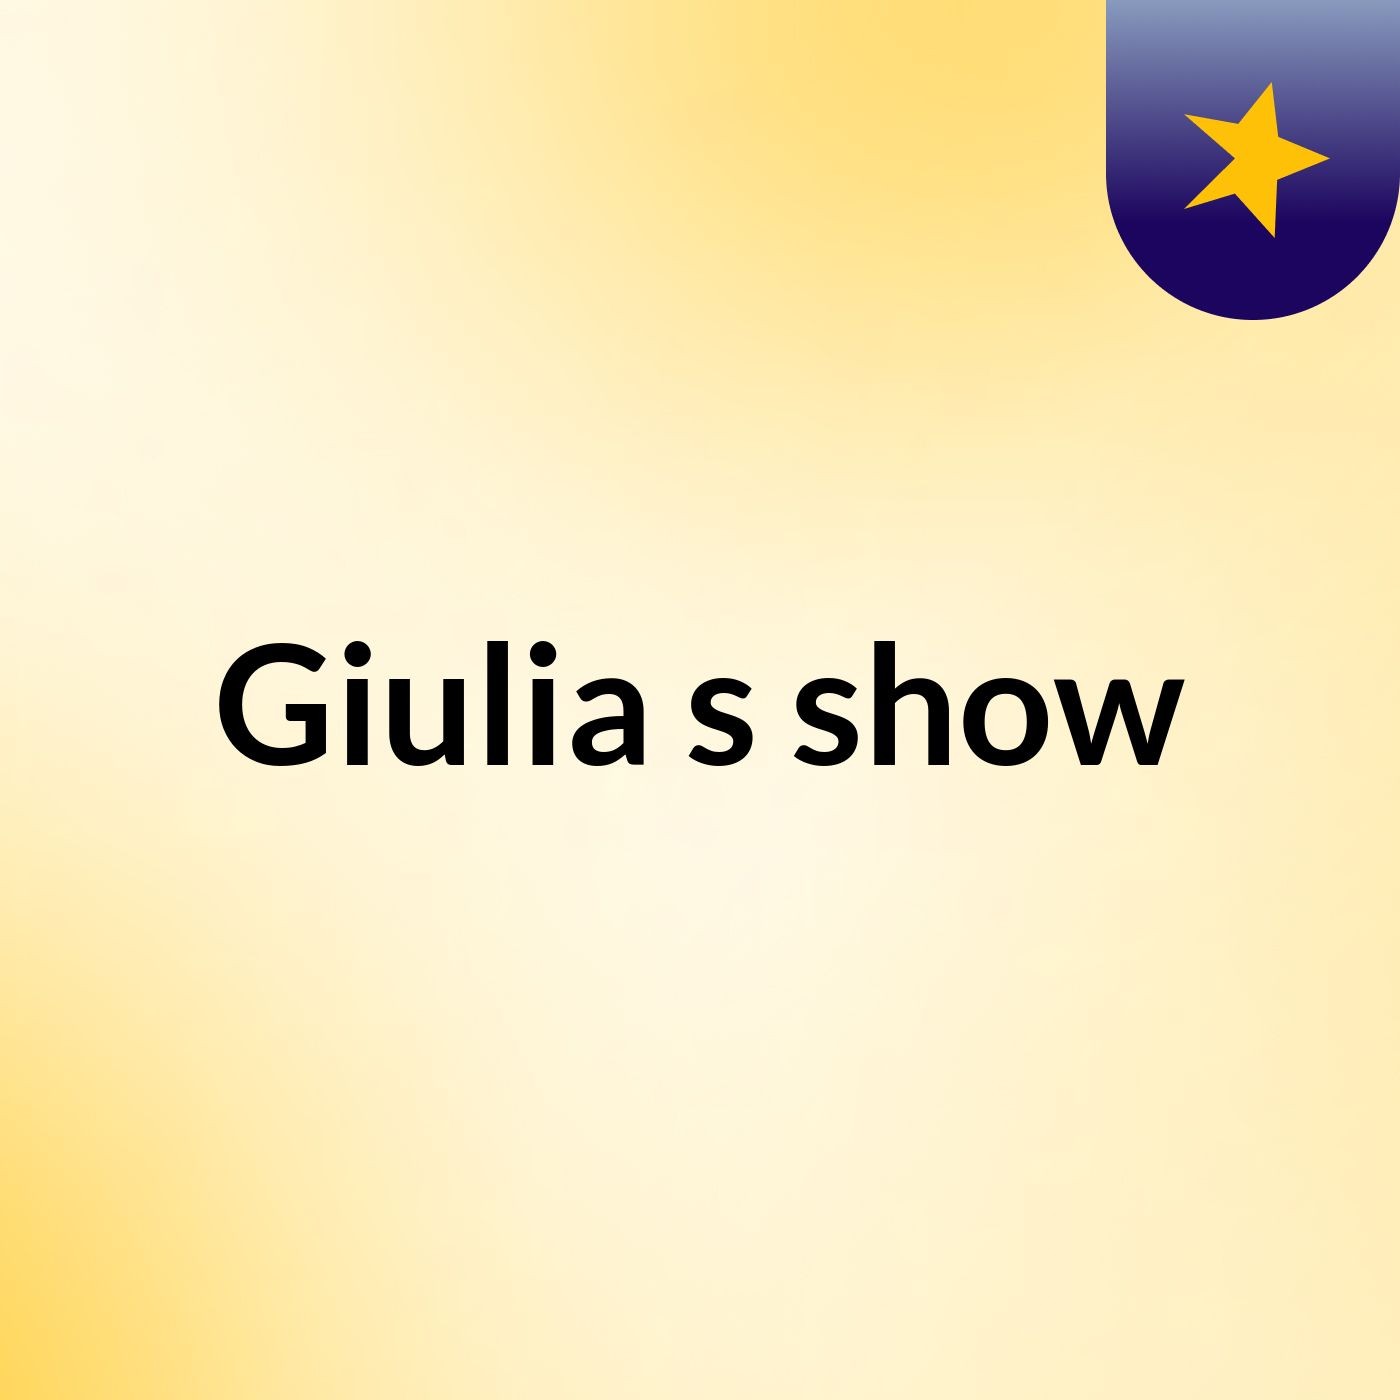 Giulia's show